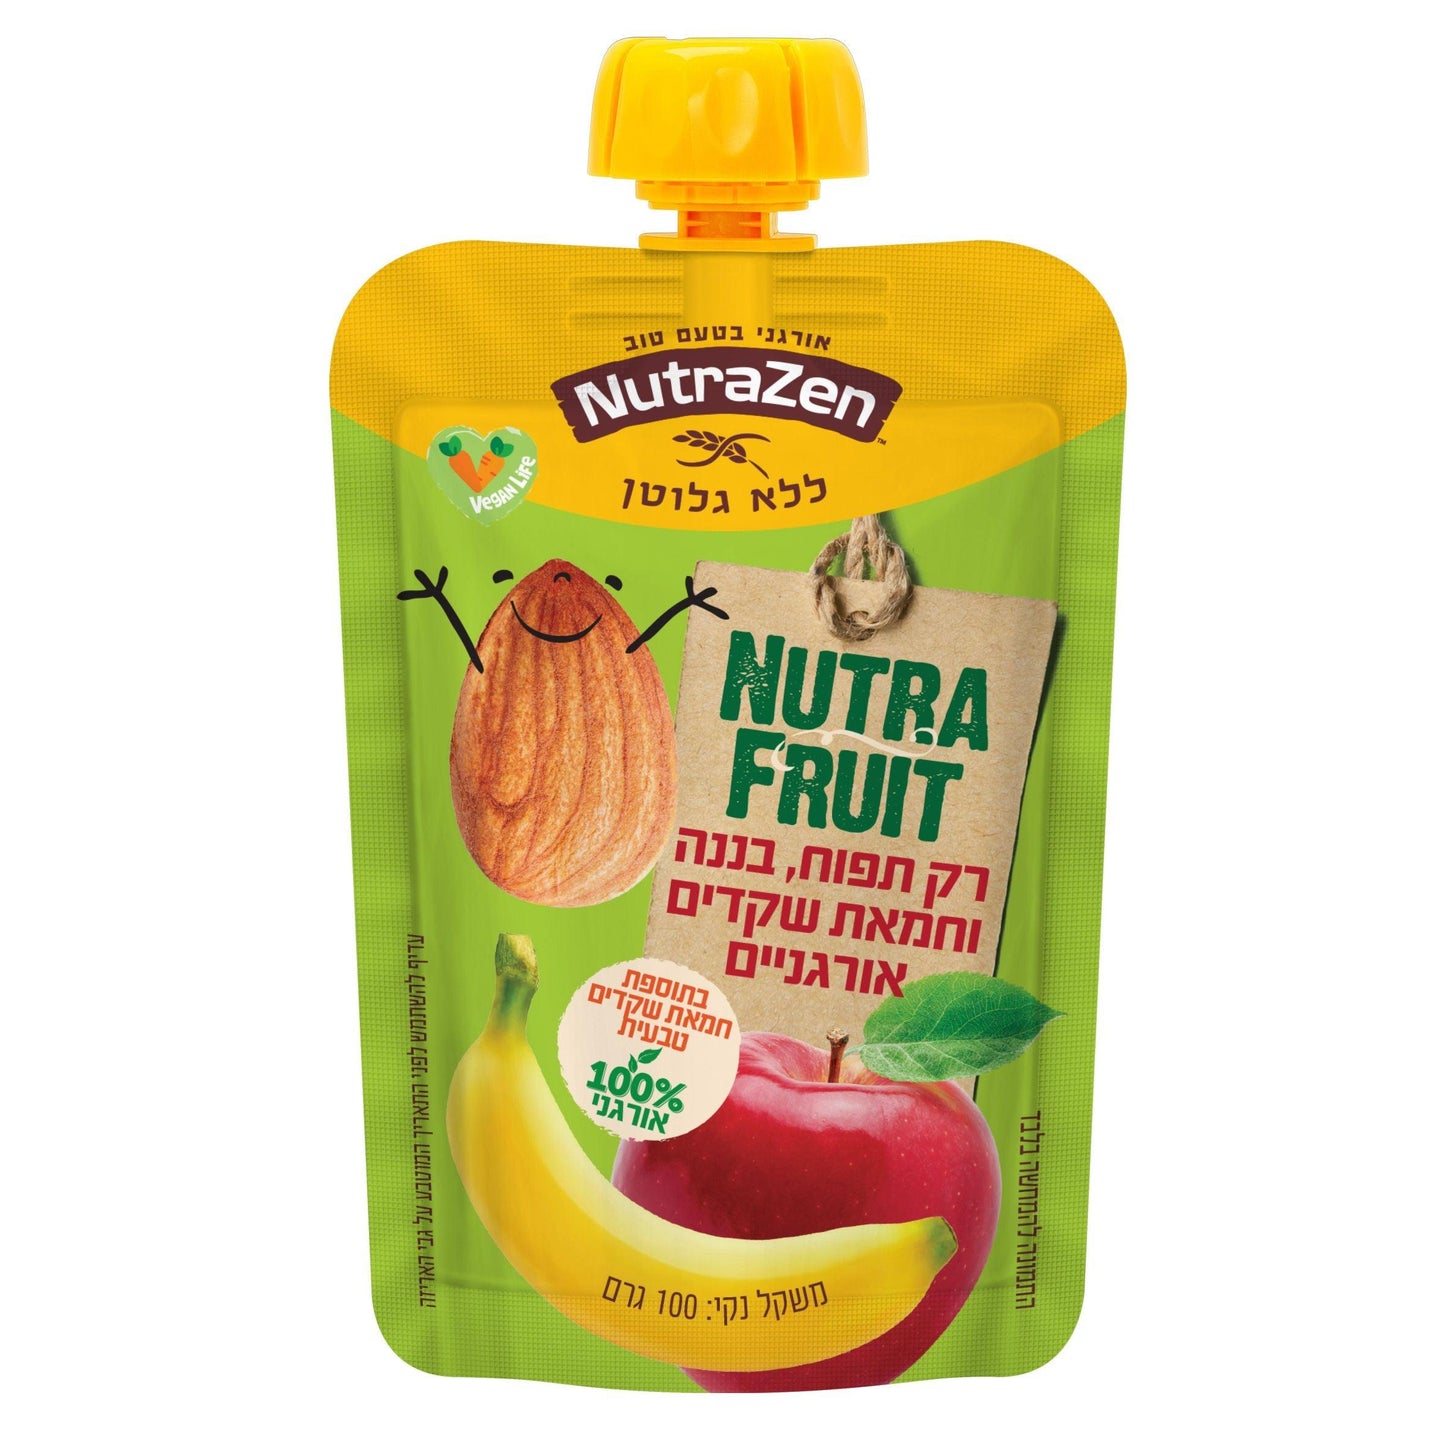 Nutra Fruit - מחית אורגנית תפוחי עץ, בננה וחמאת שקדים | נוטרה זן - 6 יחידות - NutraZen - פריקפוא